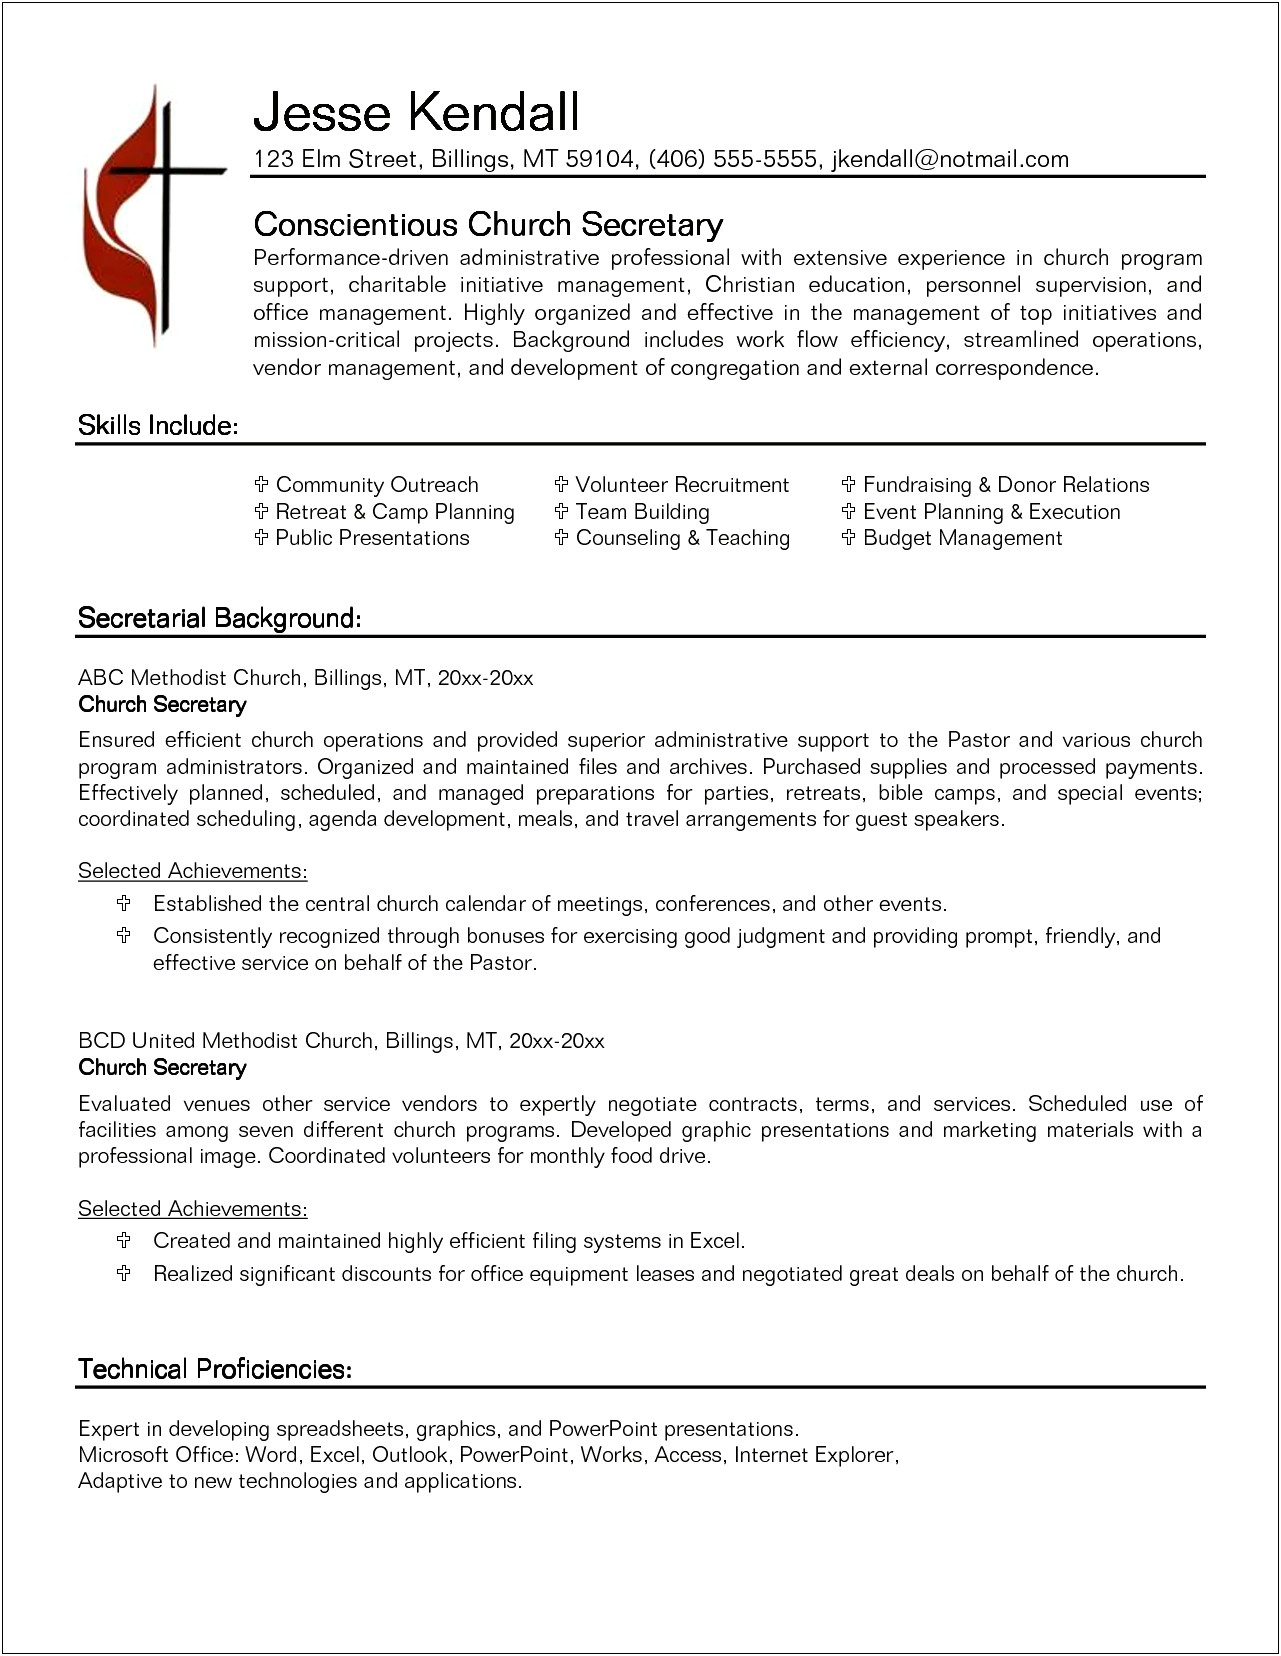 Resume Objective Examples For School Secretary